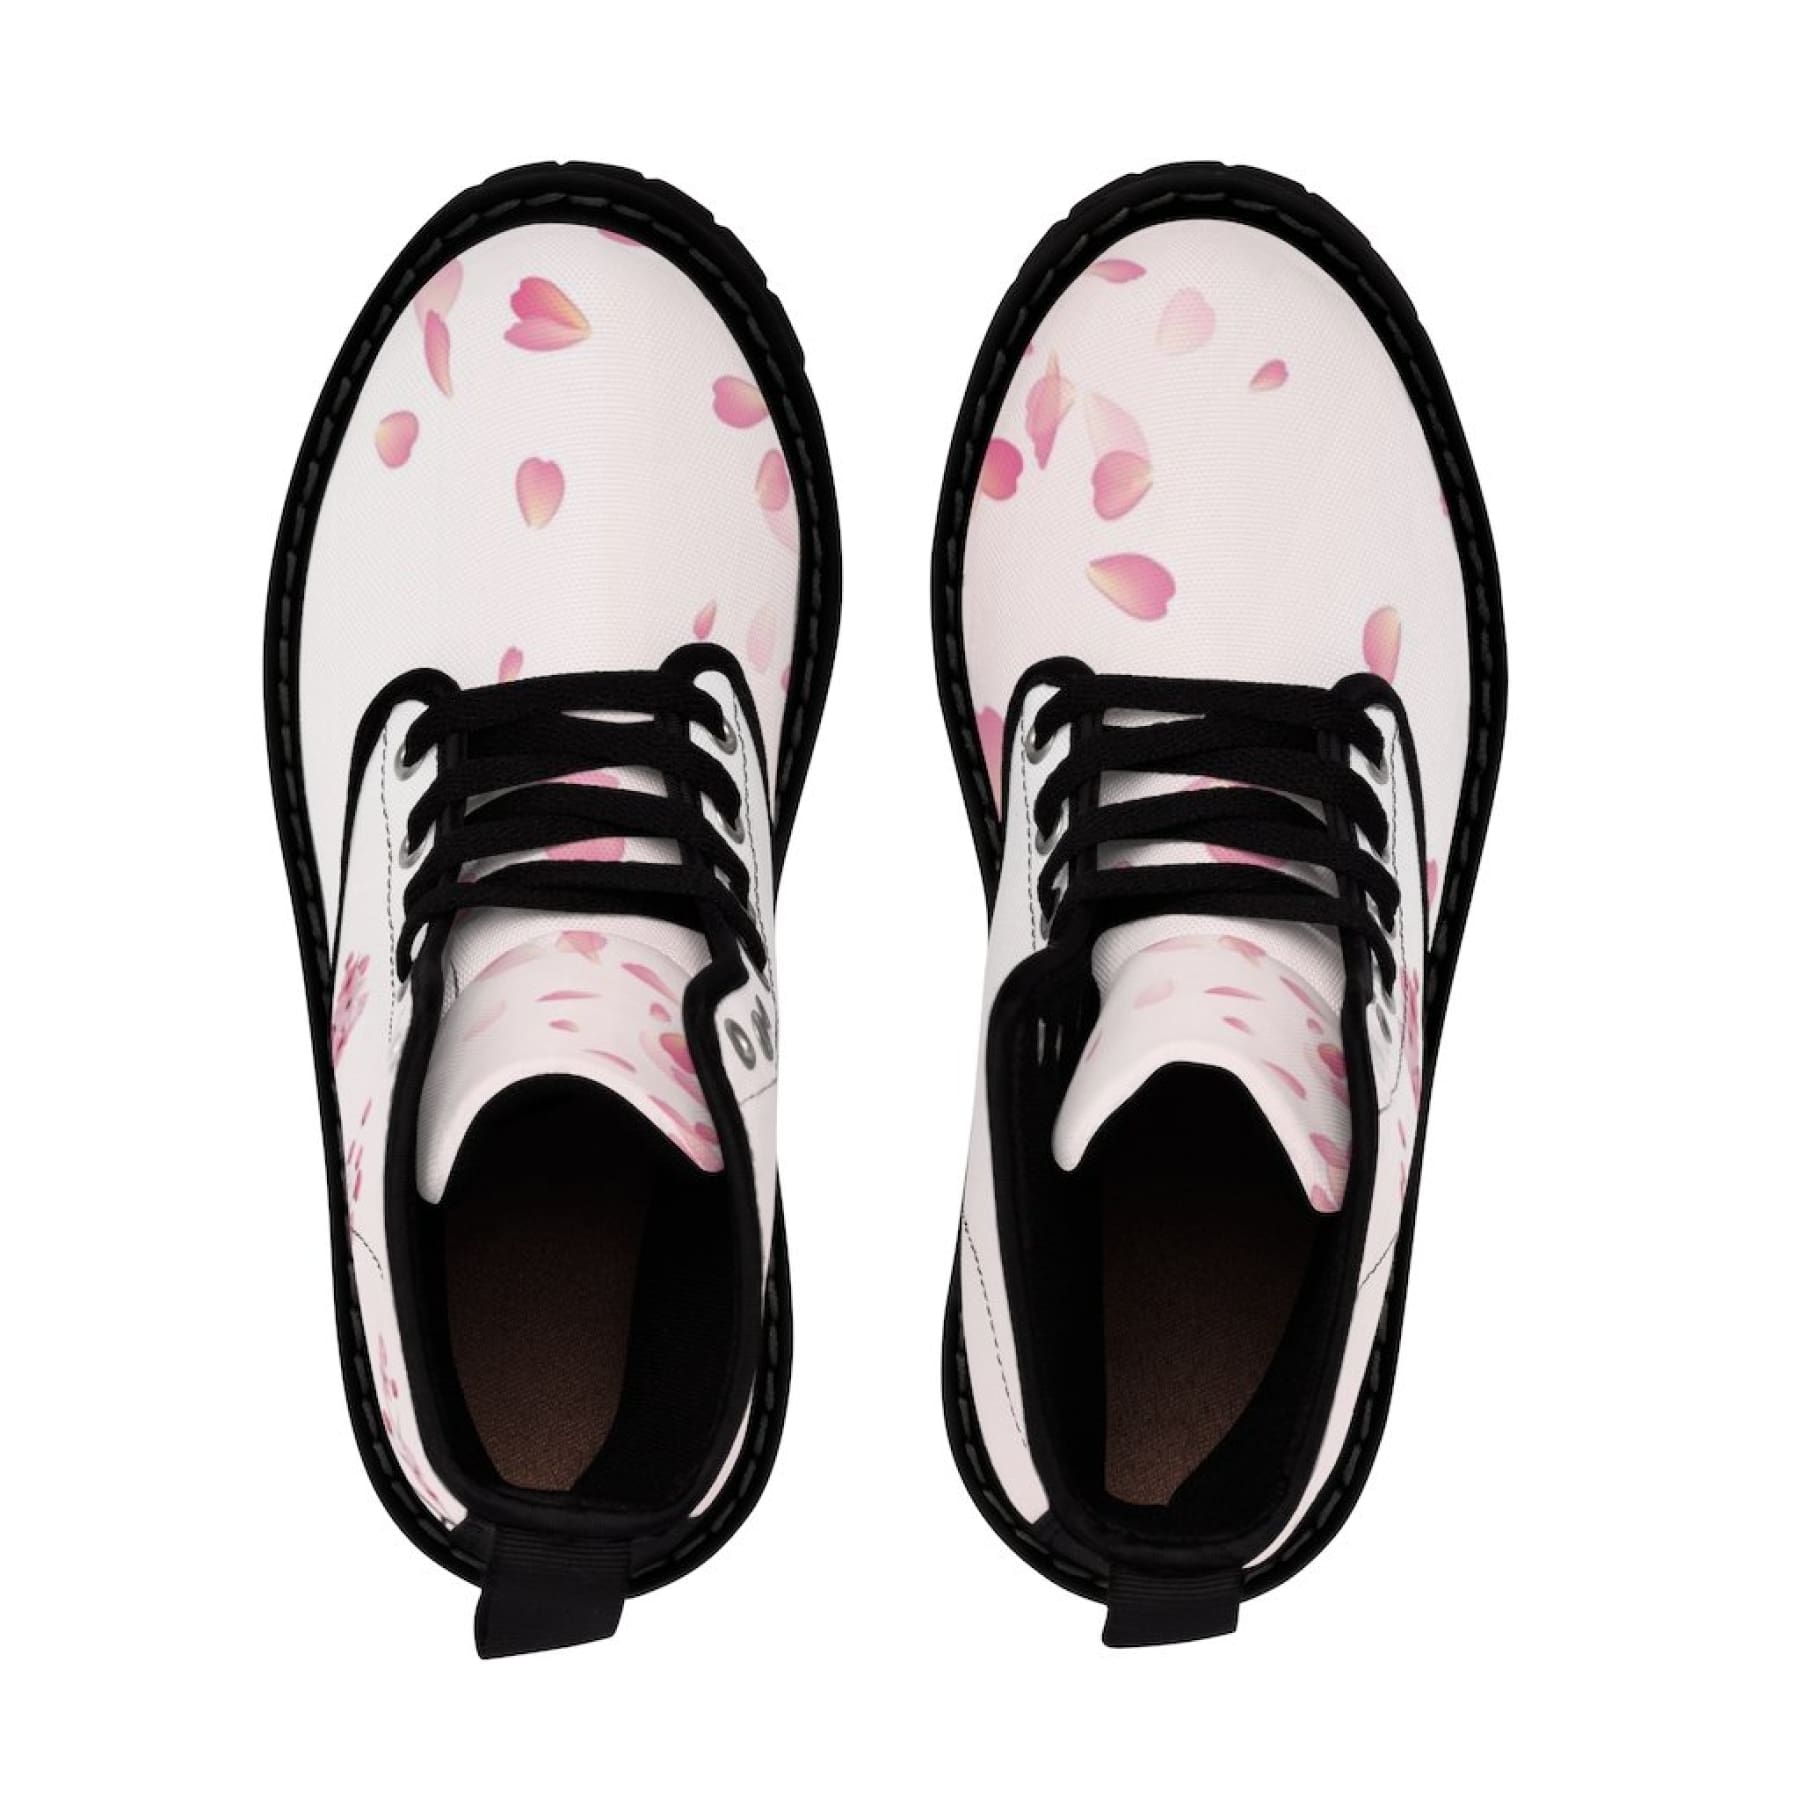 Sakura Dream, Cherry Blossom, Women's Boots